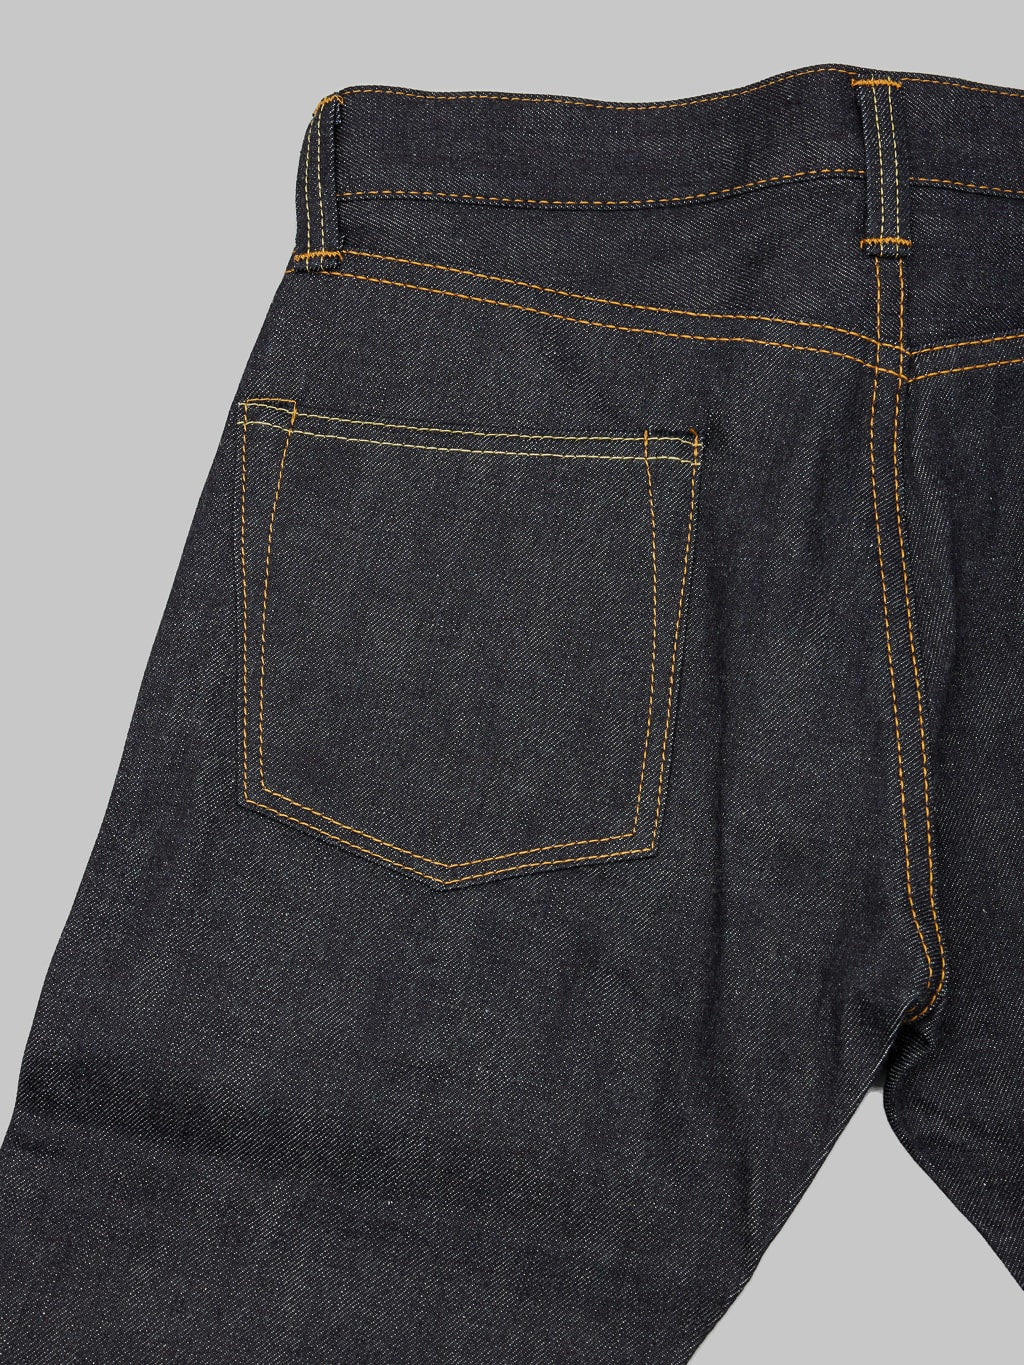 Momotaro 0605V Natural Tapered Jeans pocket stitching